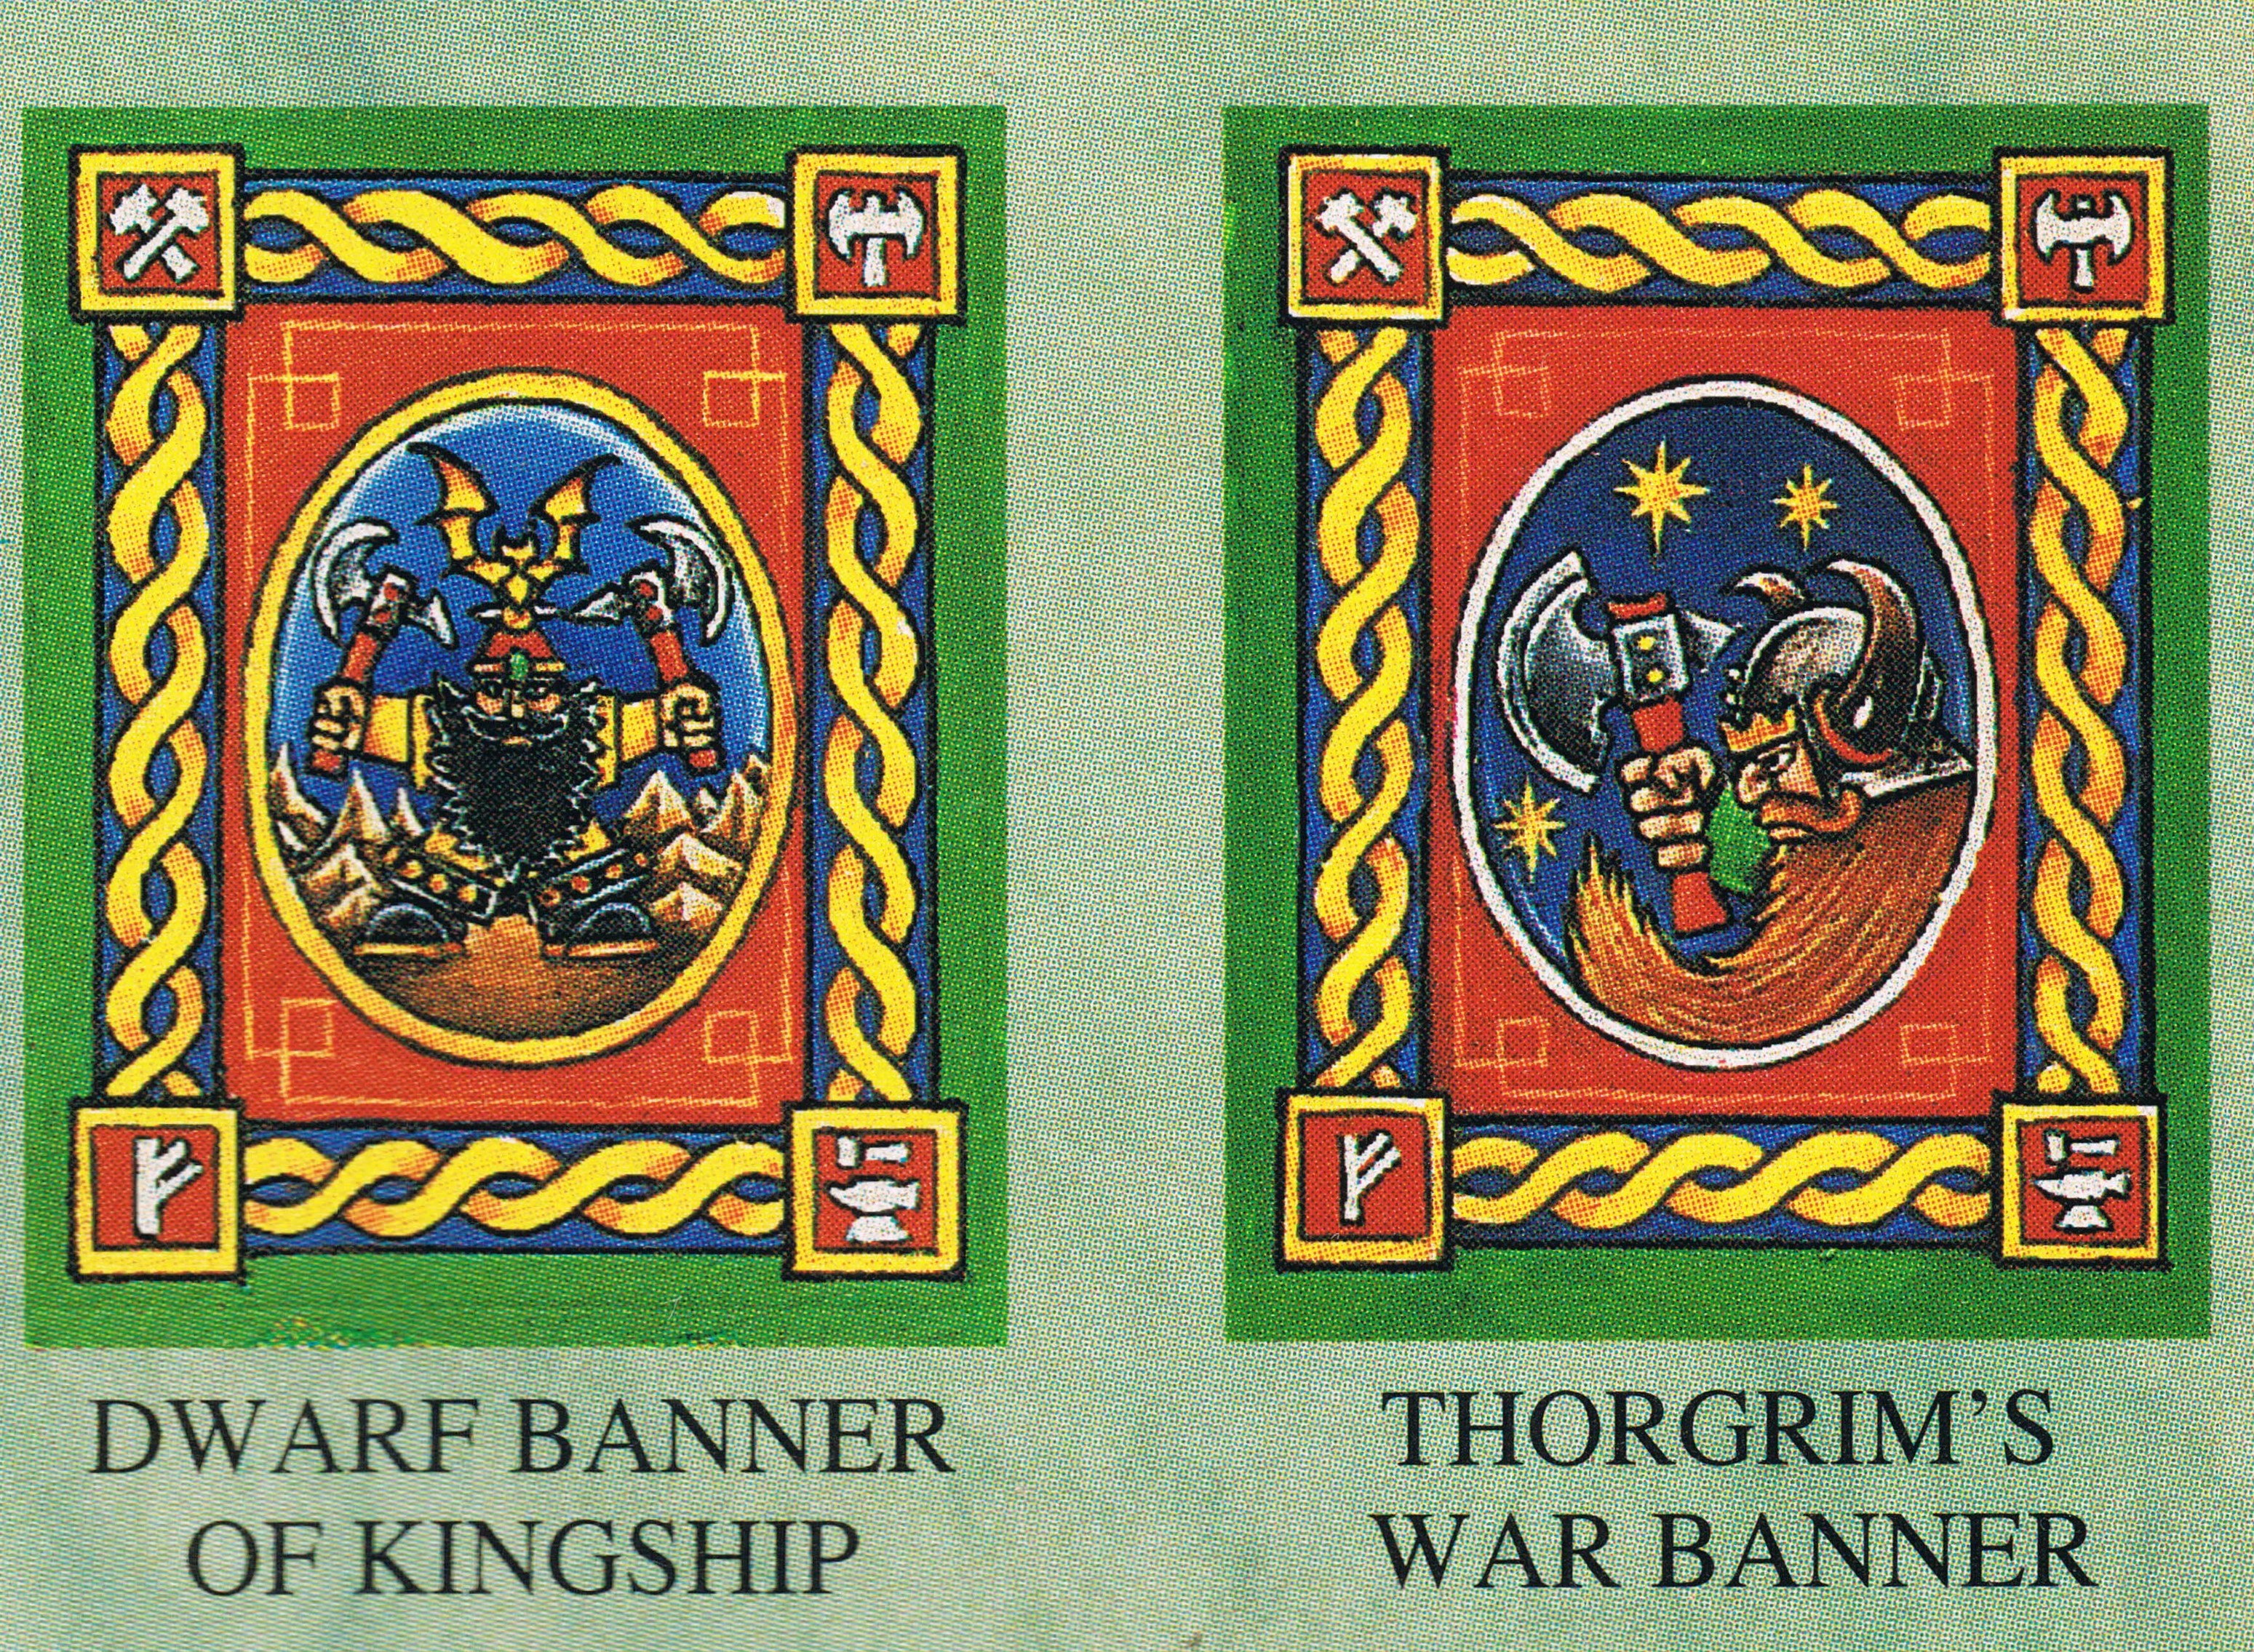 Dwarf throne of power banners